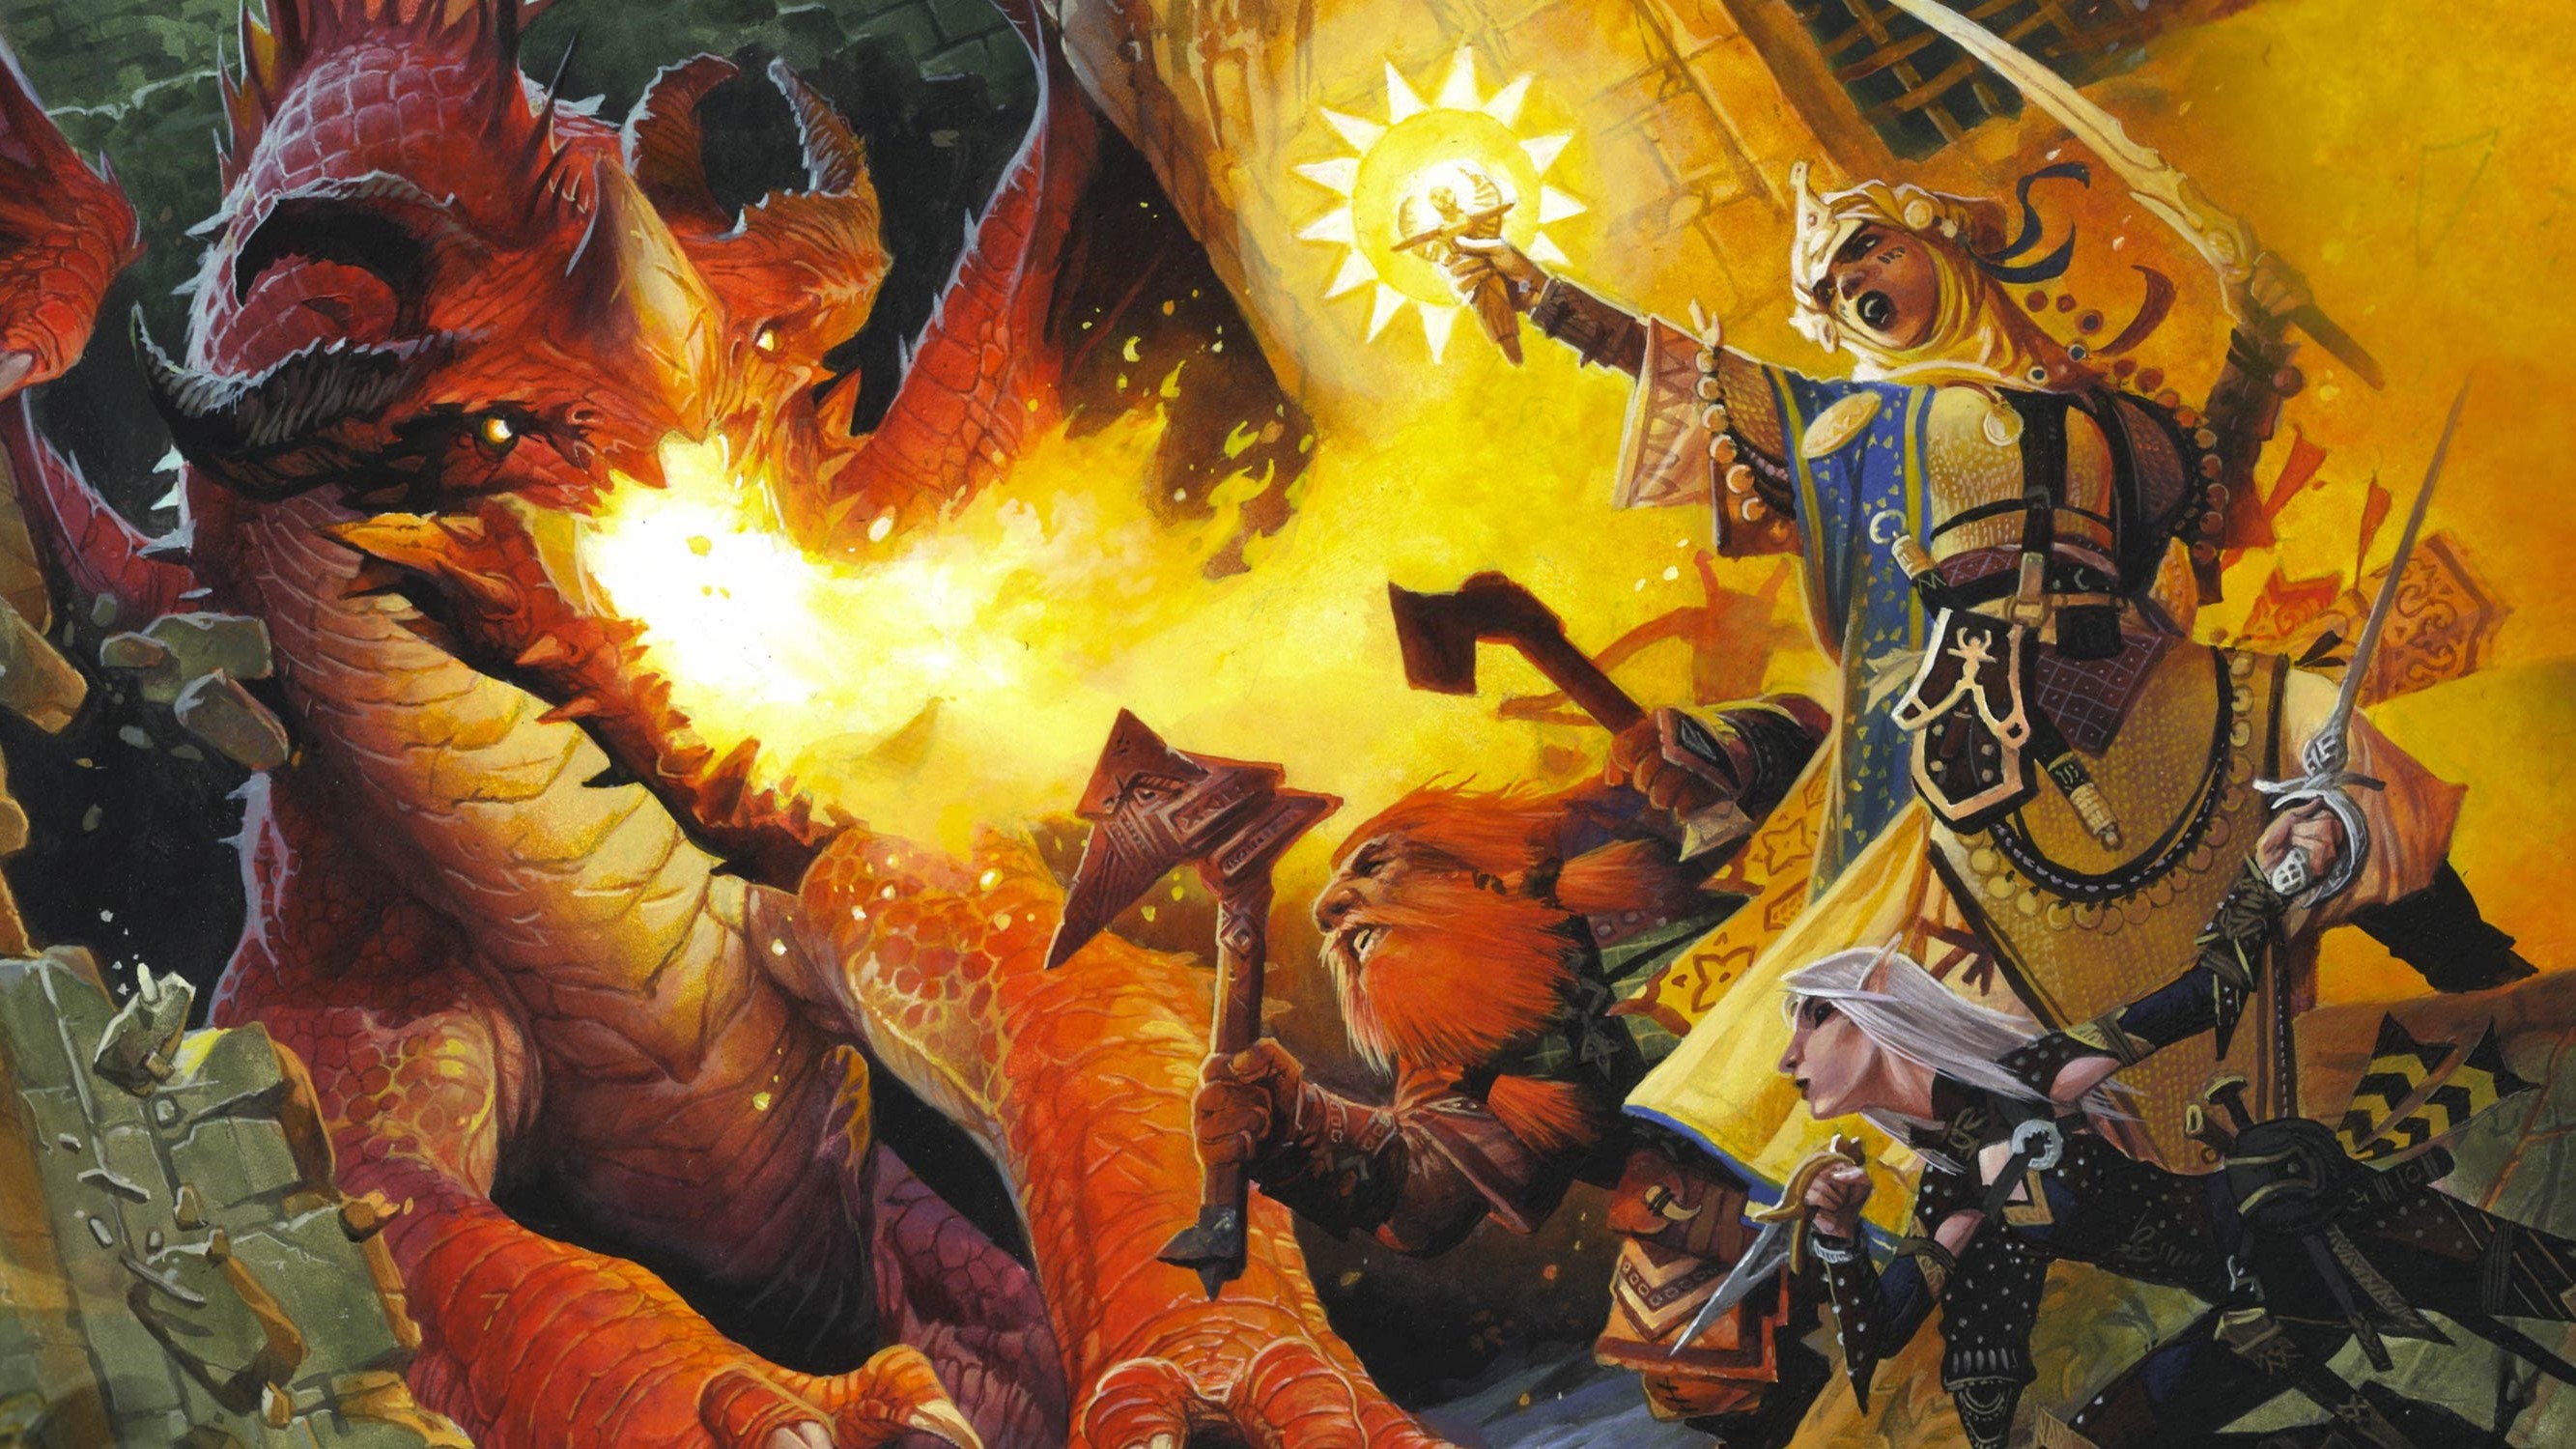 Pathfinder art of adventurers battling a dragon.